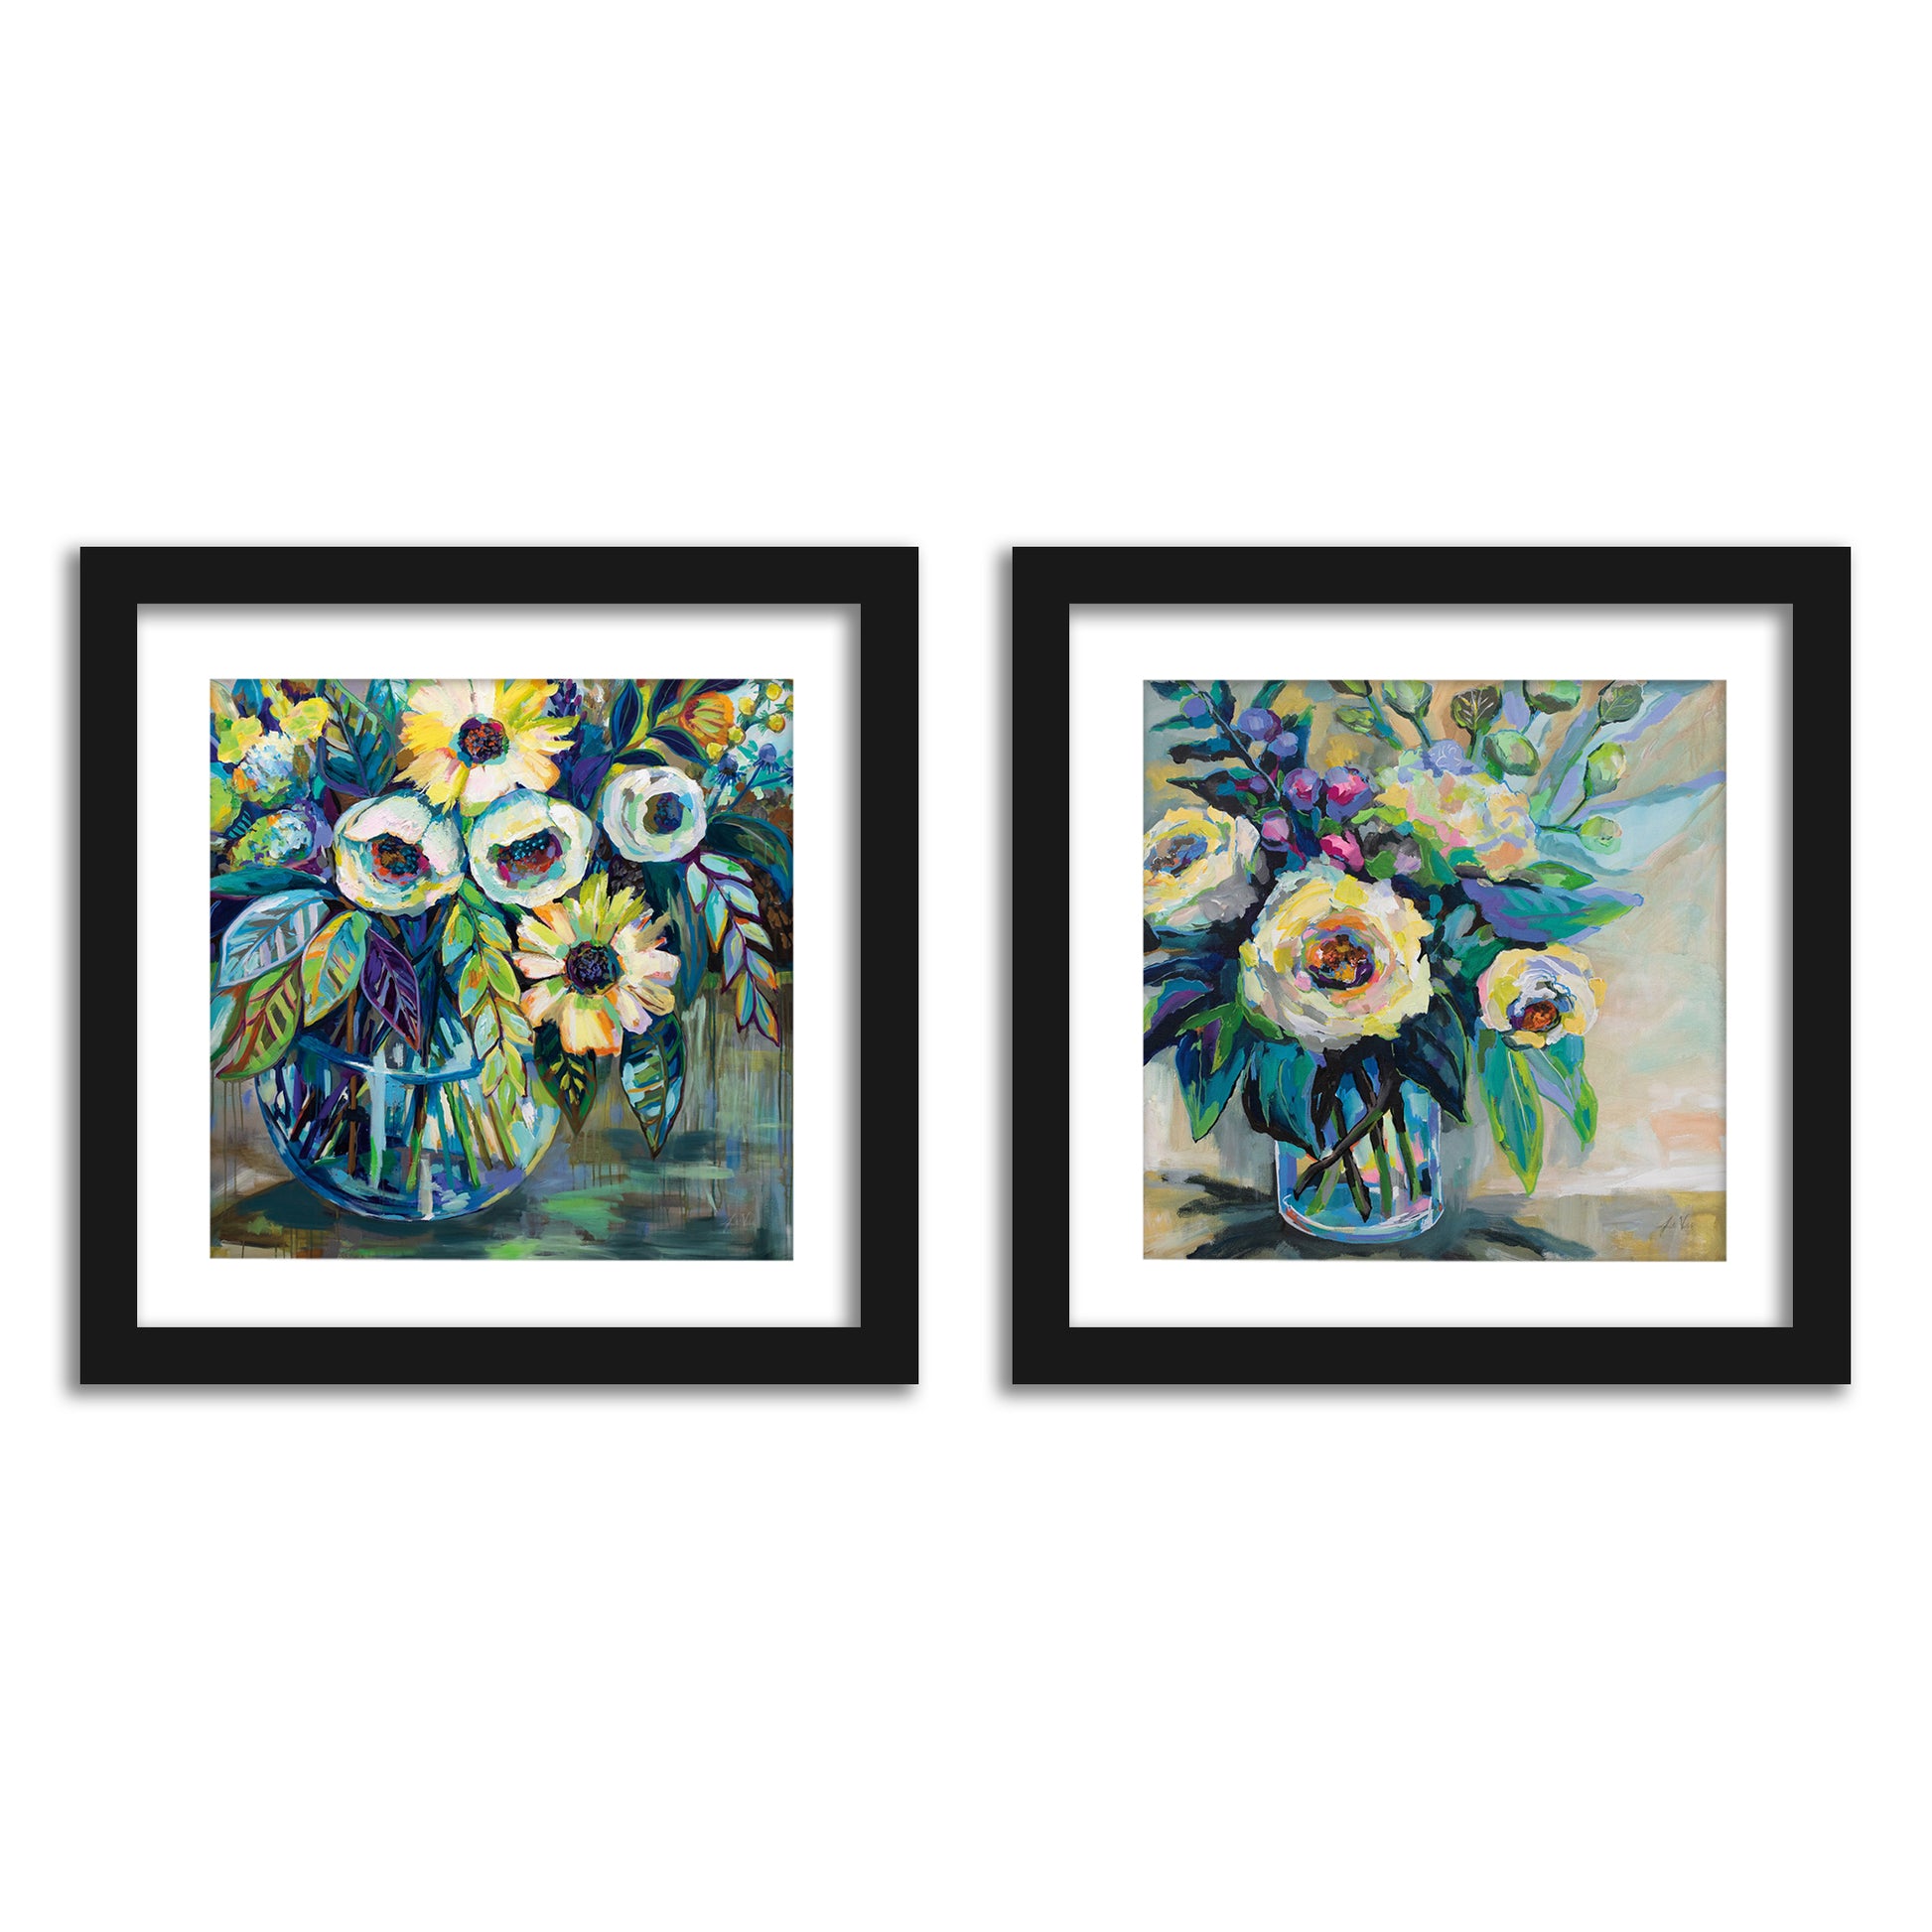  Floral Impressionism Bathroom Wall Art - Set of 2 Framed Prints by Wild Apple